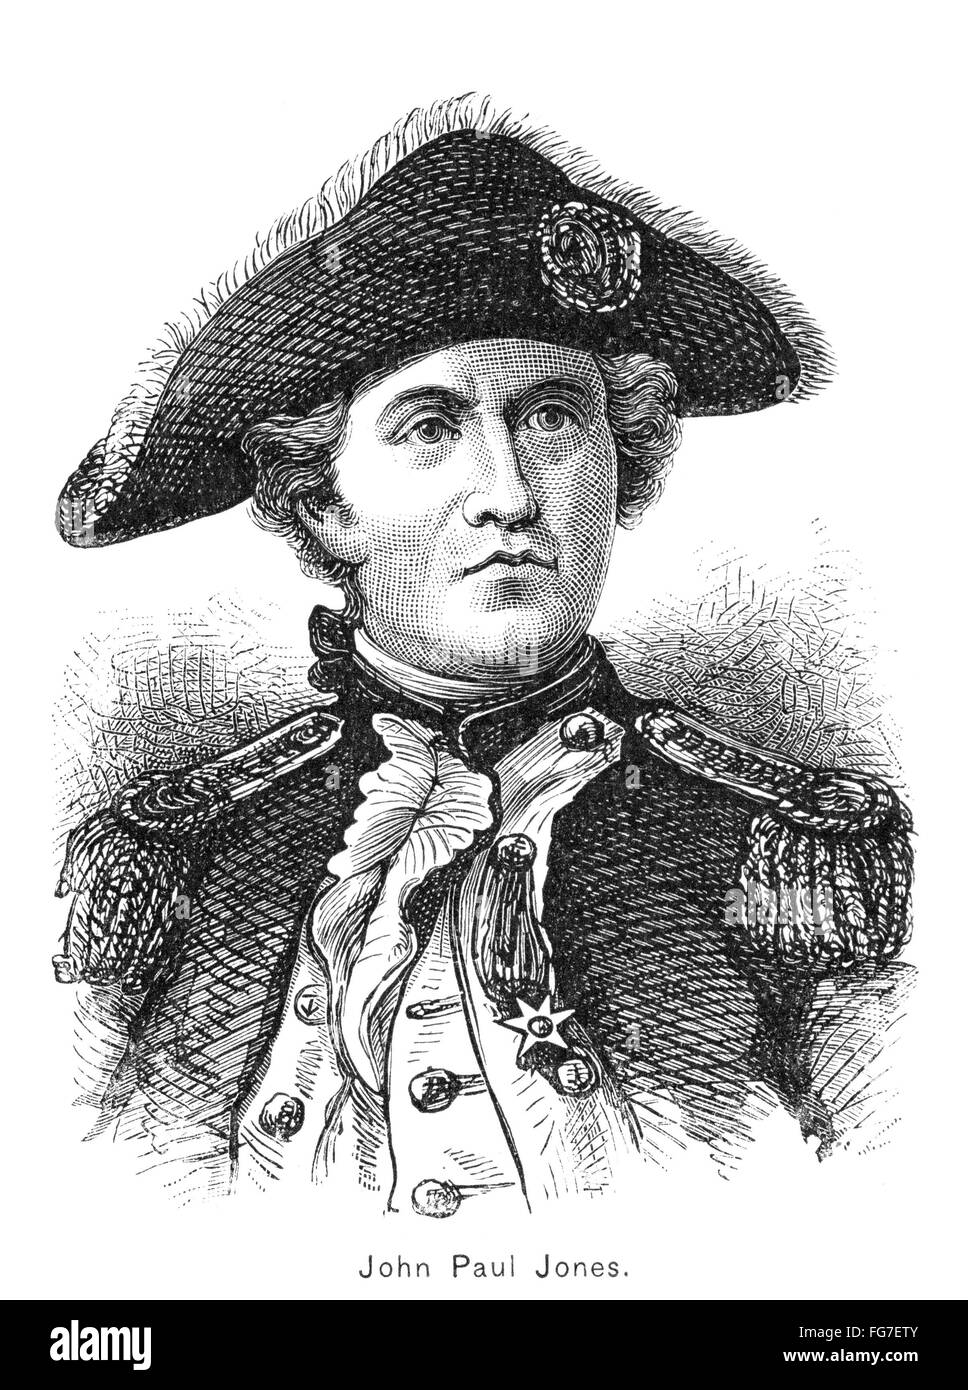 JOHN PAUL JONES (1747-1792). /nAmerican (Scottish-born) naval commander. Line engraving, American, 19th century. Stock Photo